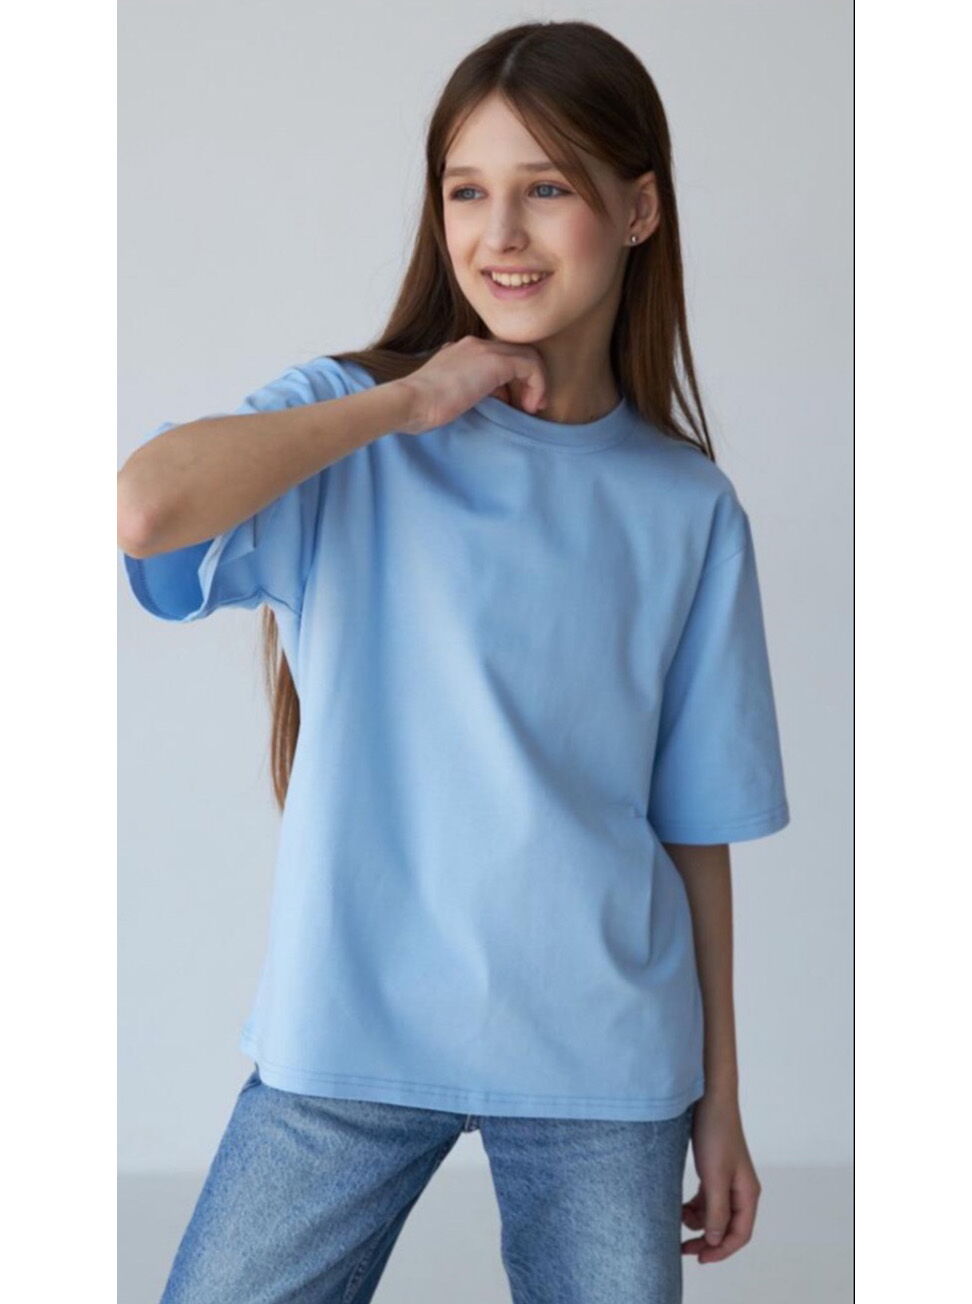 Базовая футболка оверсайз для девочки голубая 1904 - цена